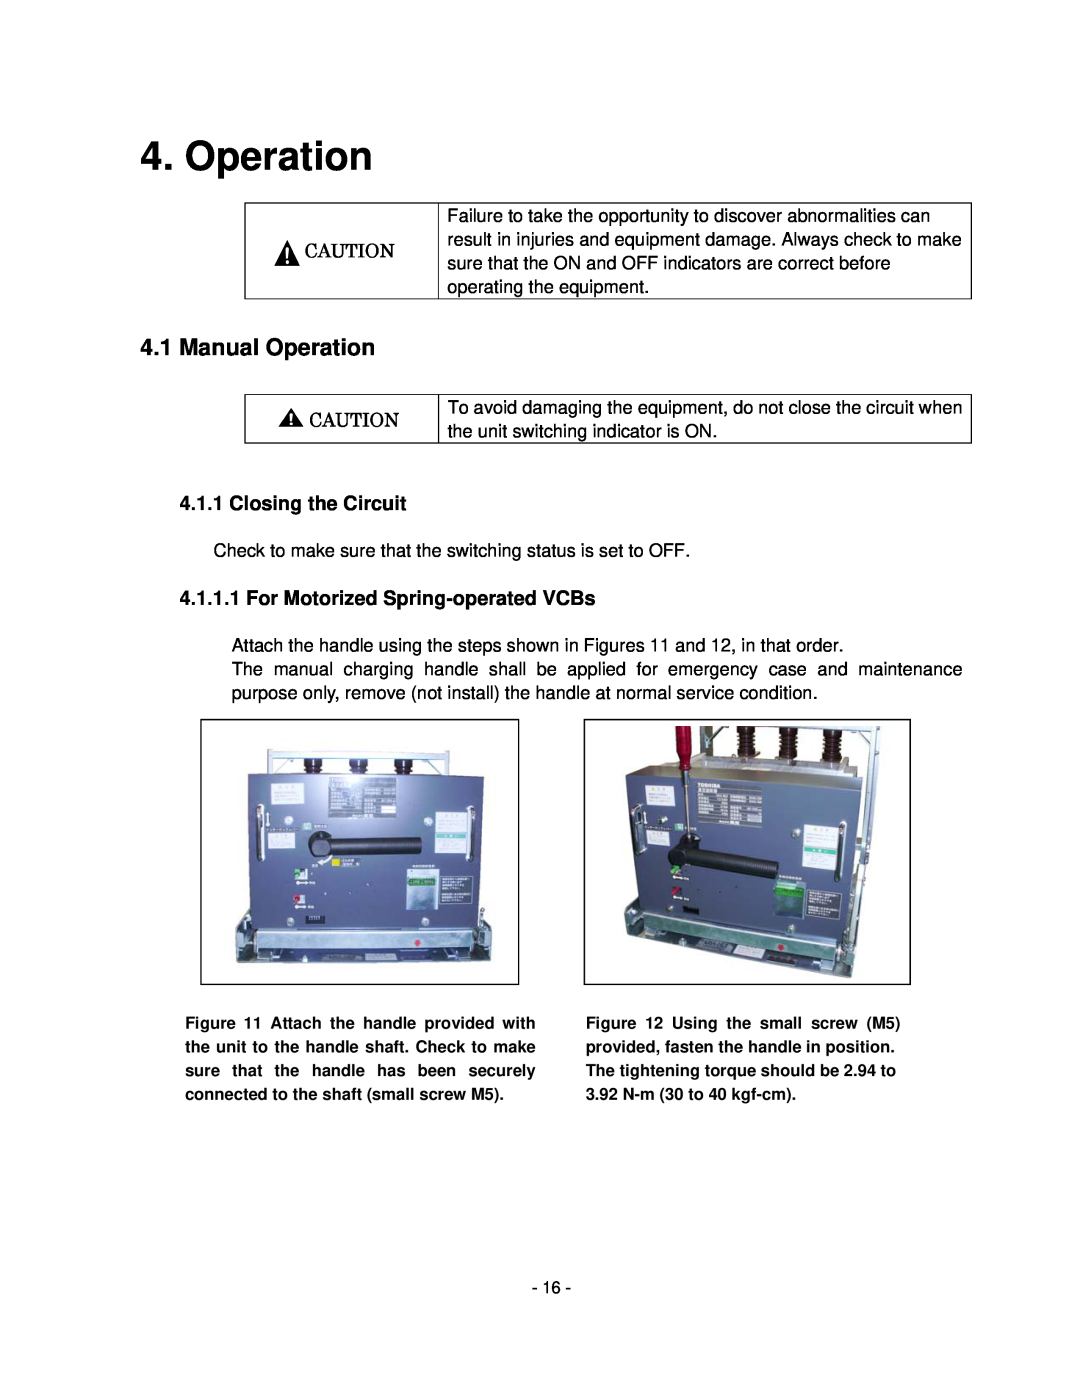 Toshiba HV6CS-MLD, H6A-HLS operation manual Manual Operation 